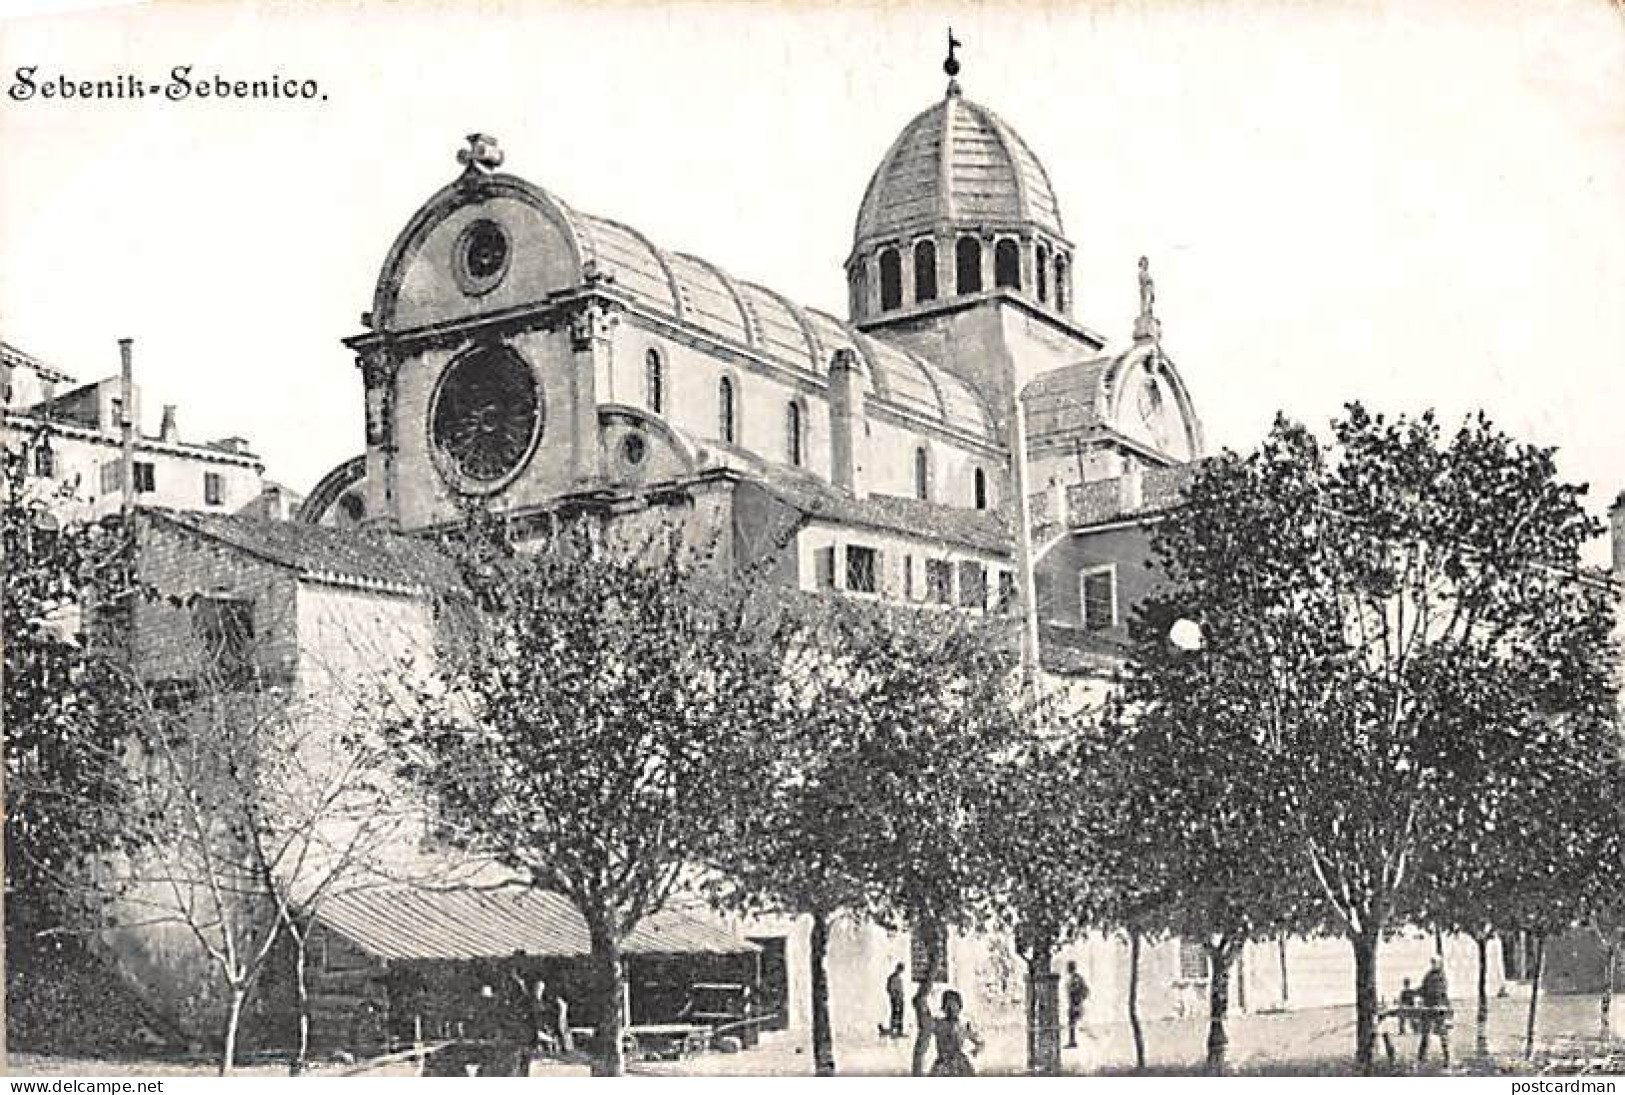 CROATIA - Sibenik (Sebenico) - Il Duomo 2 - Croatia